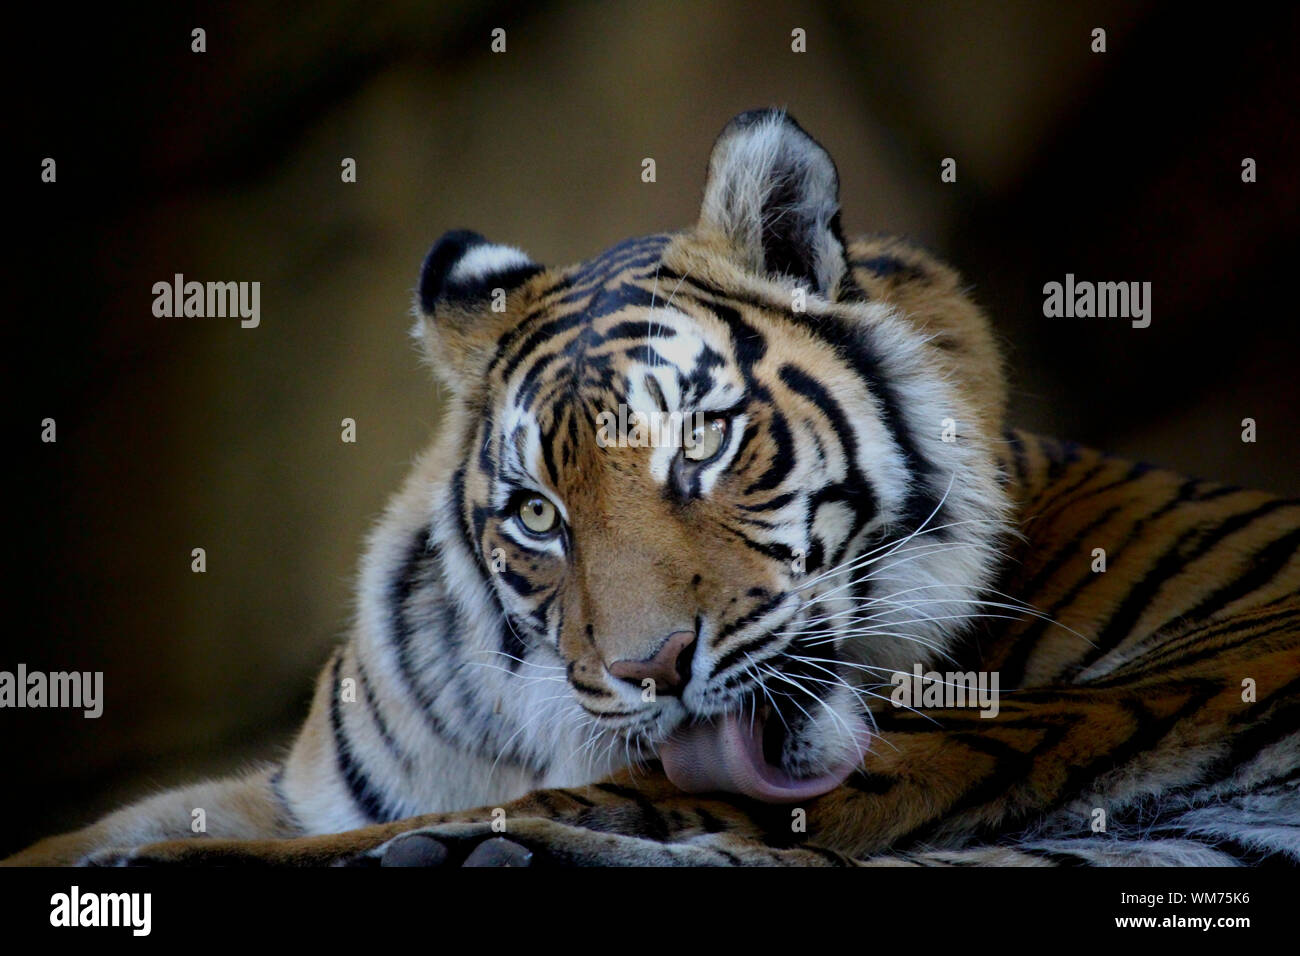 Panthera tigris sondaica - Tiger of Indonesia Stock Photo